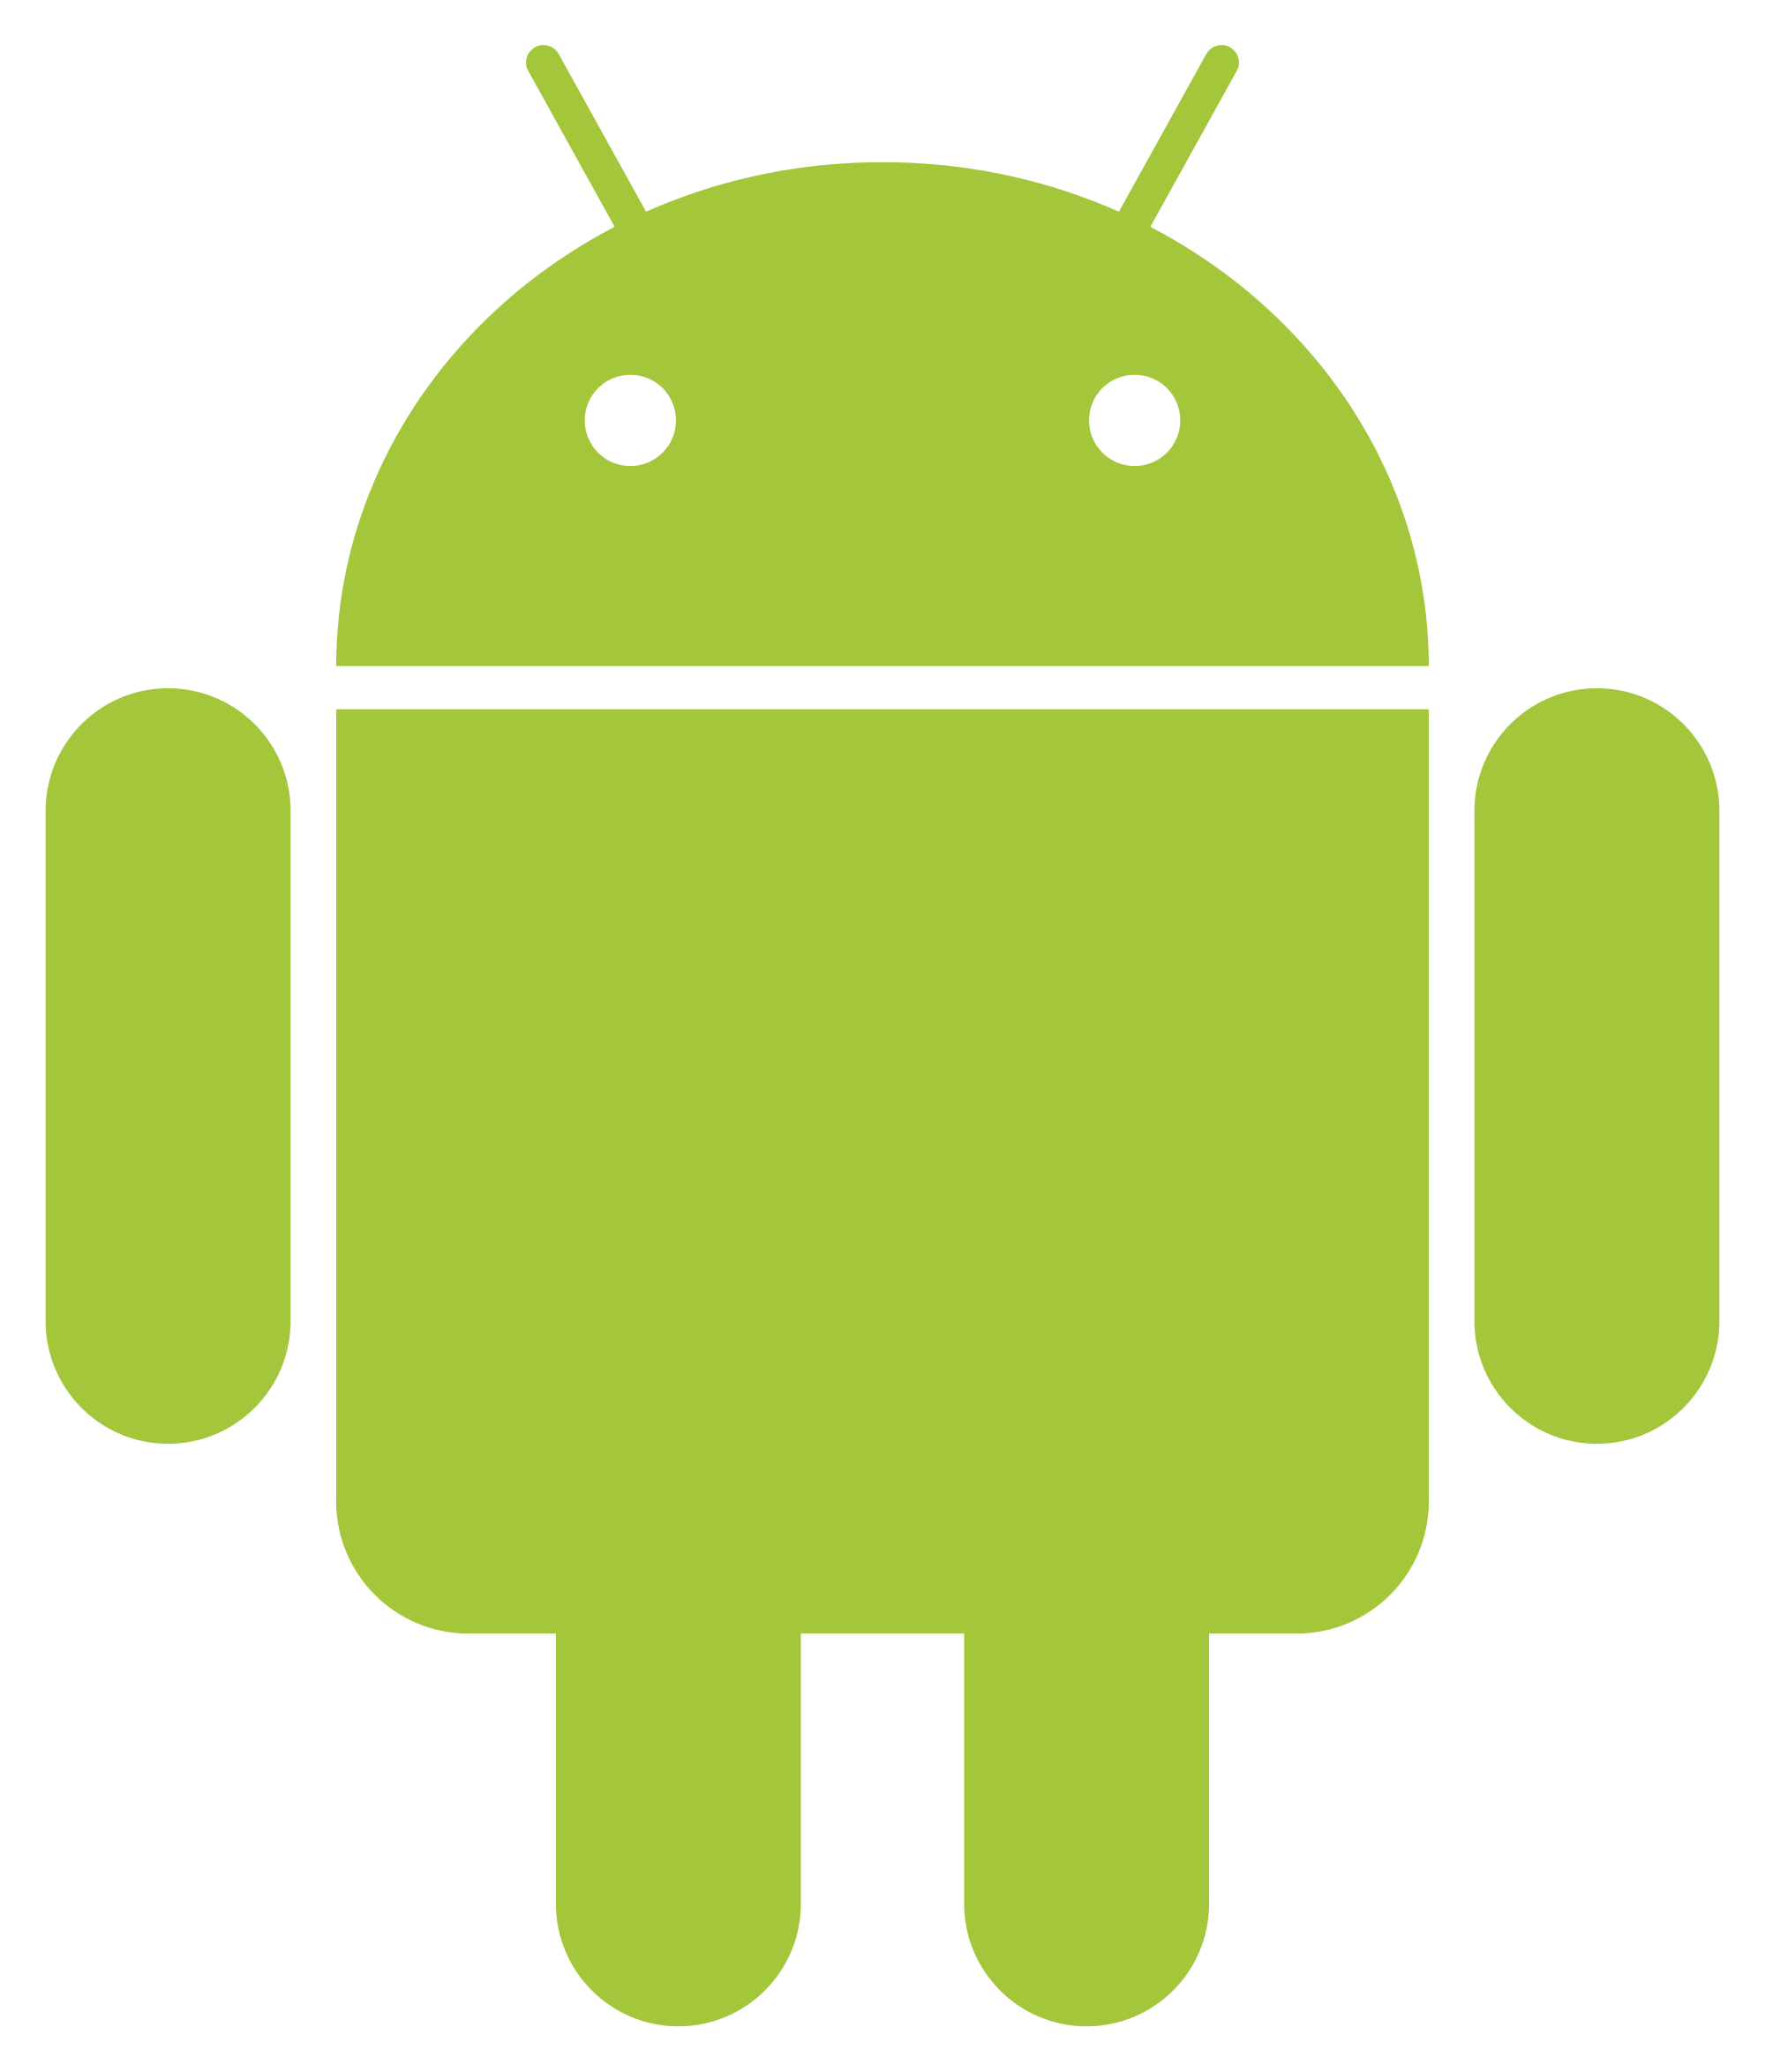 Transparent Green Logo - Android Robot Green transparent PNG - StickPNG